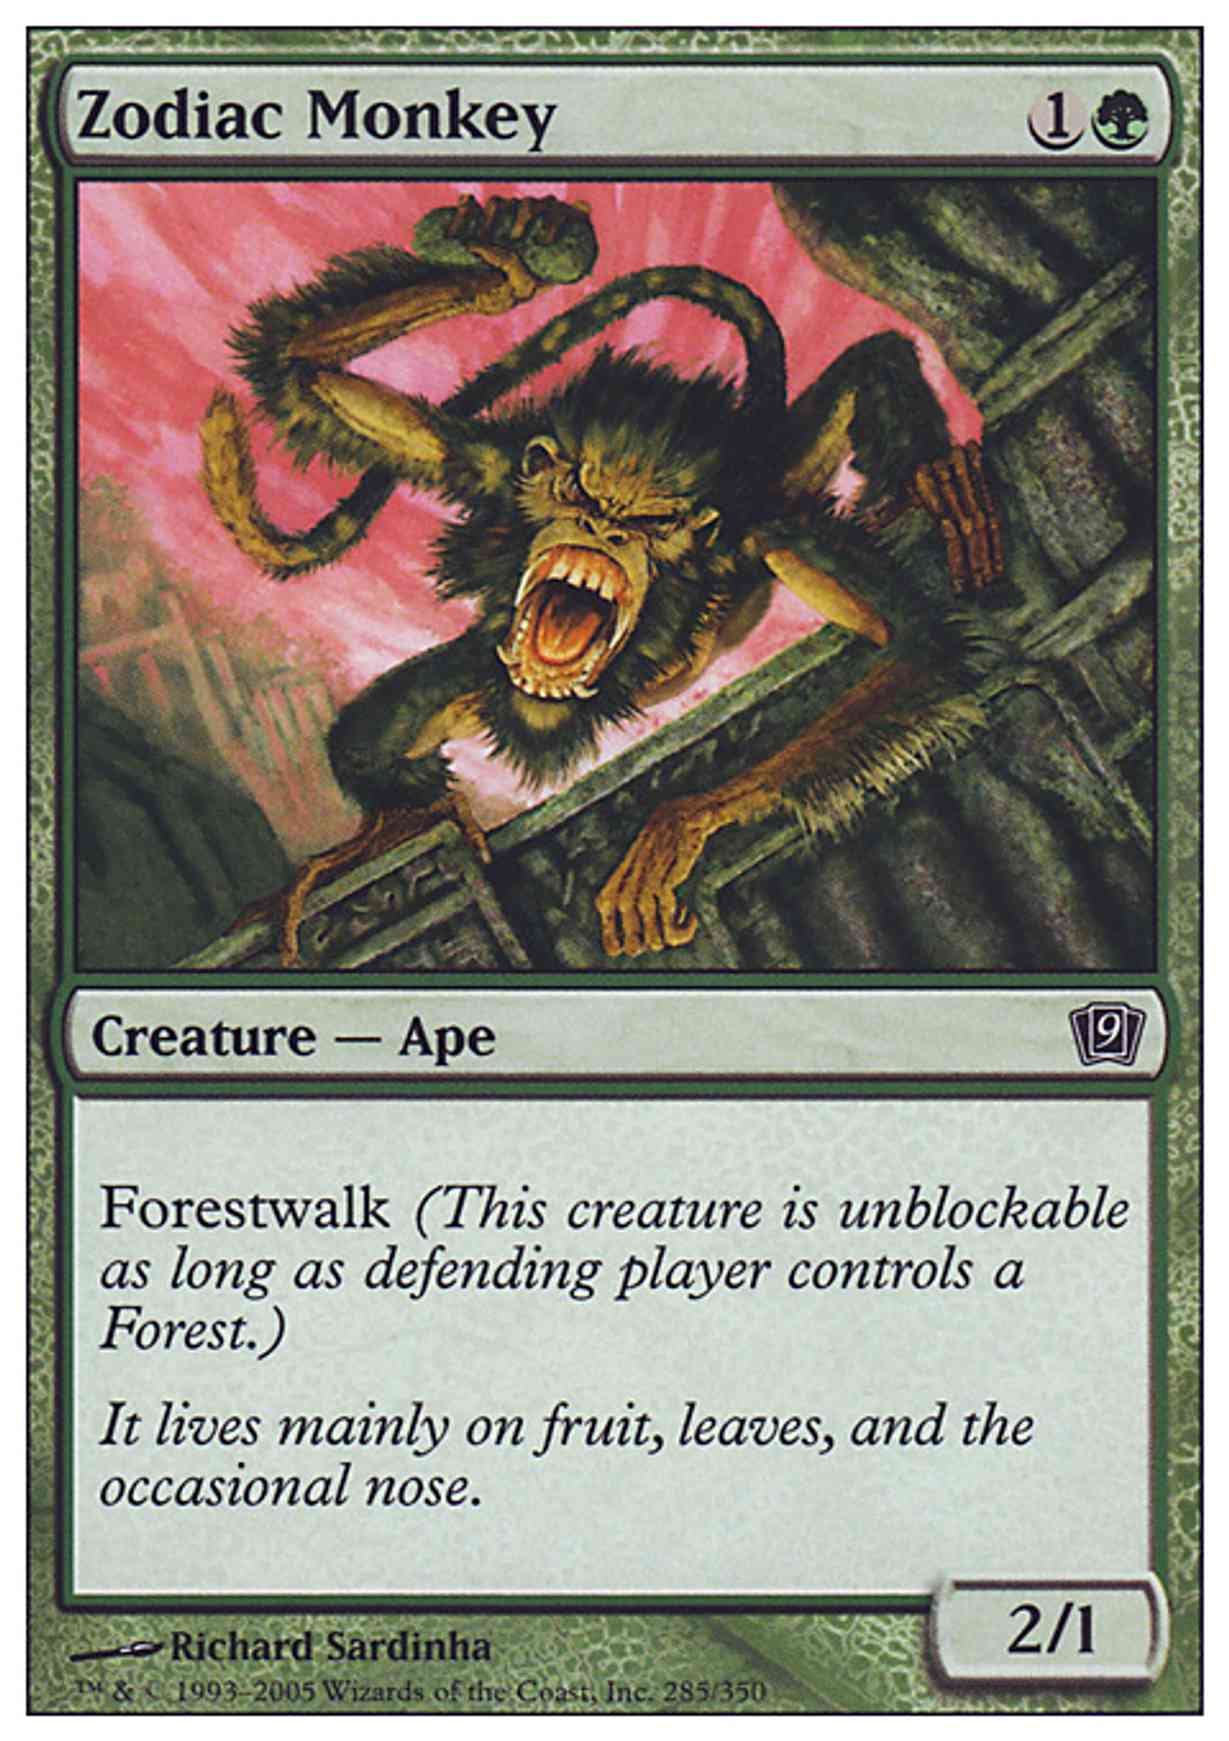 Zodiac Monkey magic card front